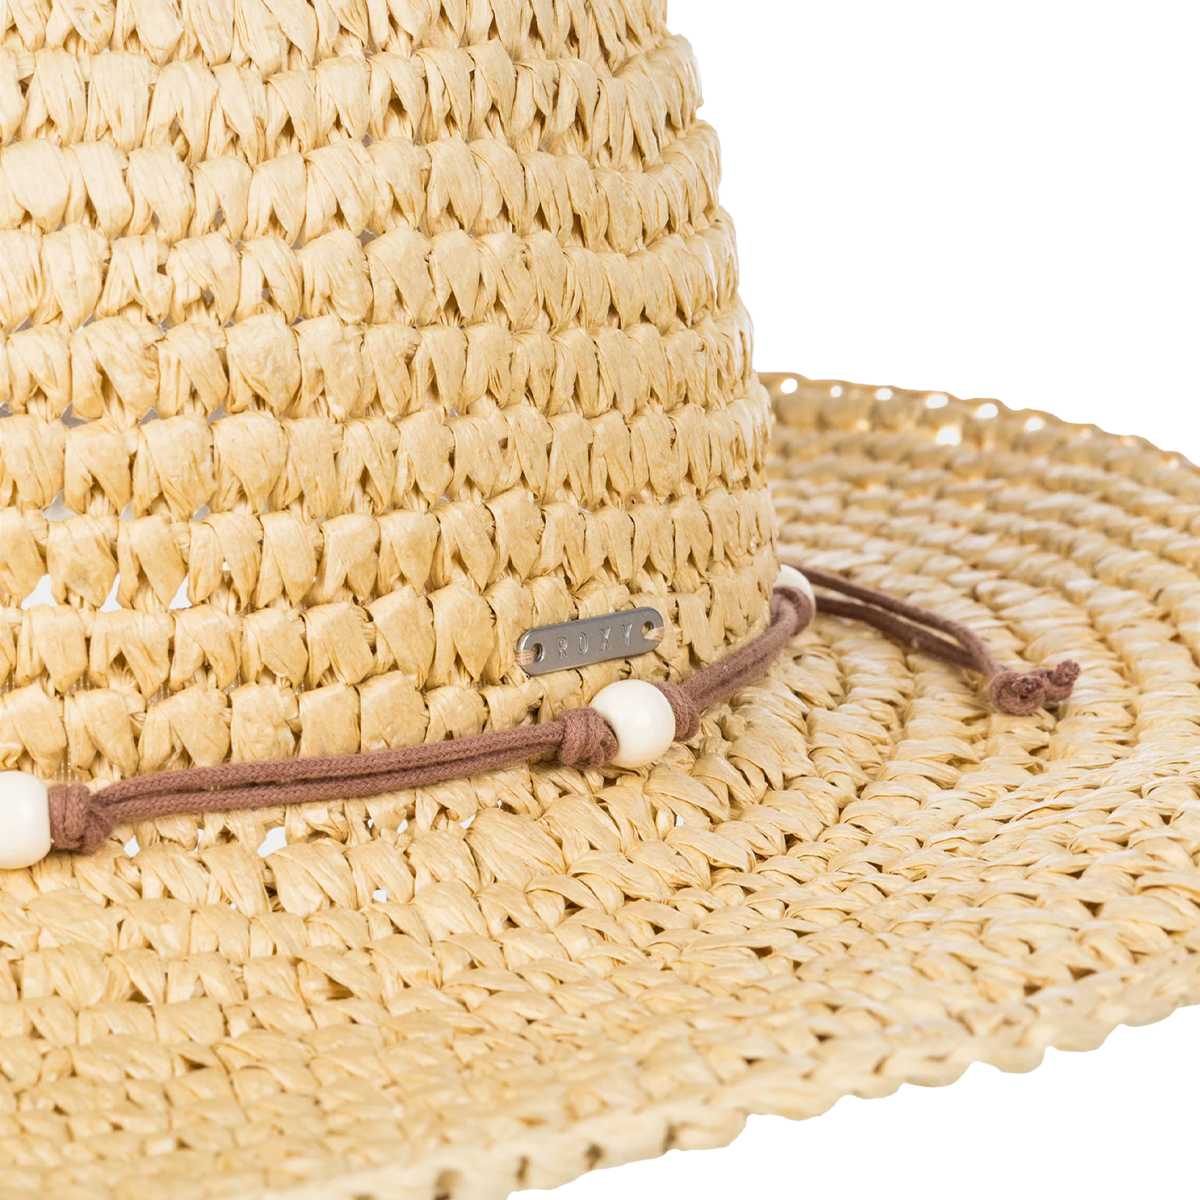 Women's Cherish Summer Hat alternate view